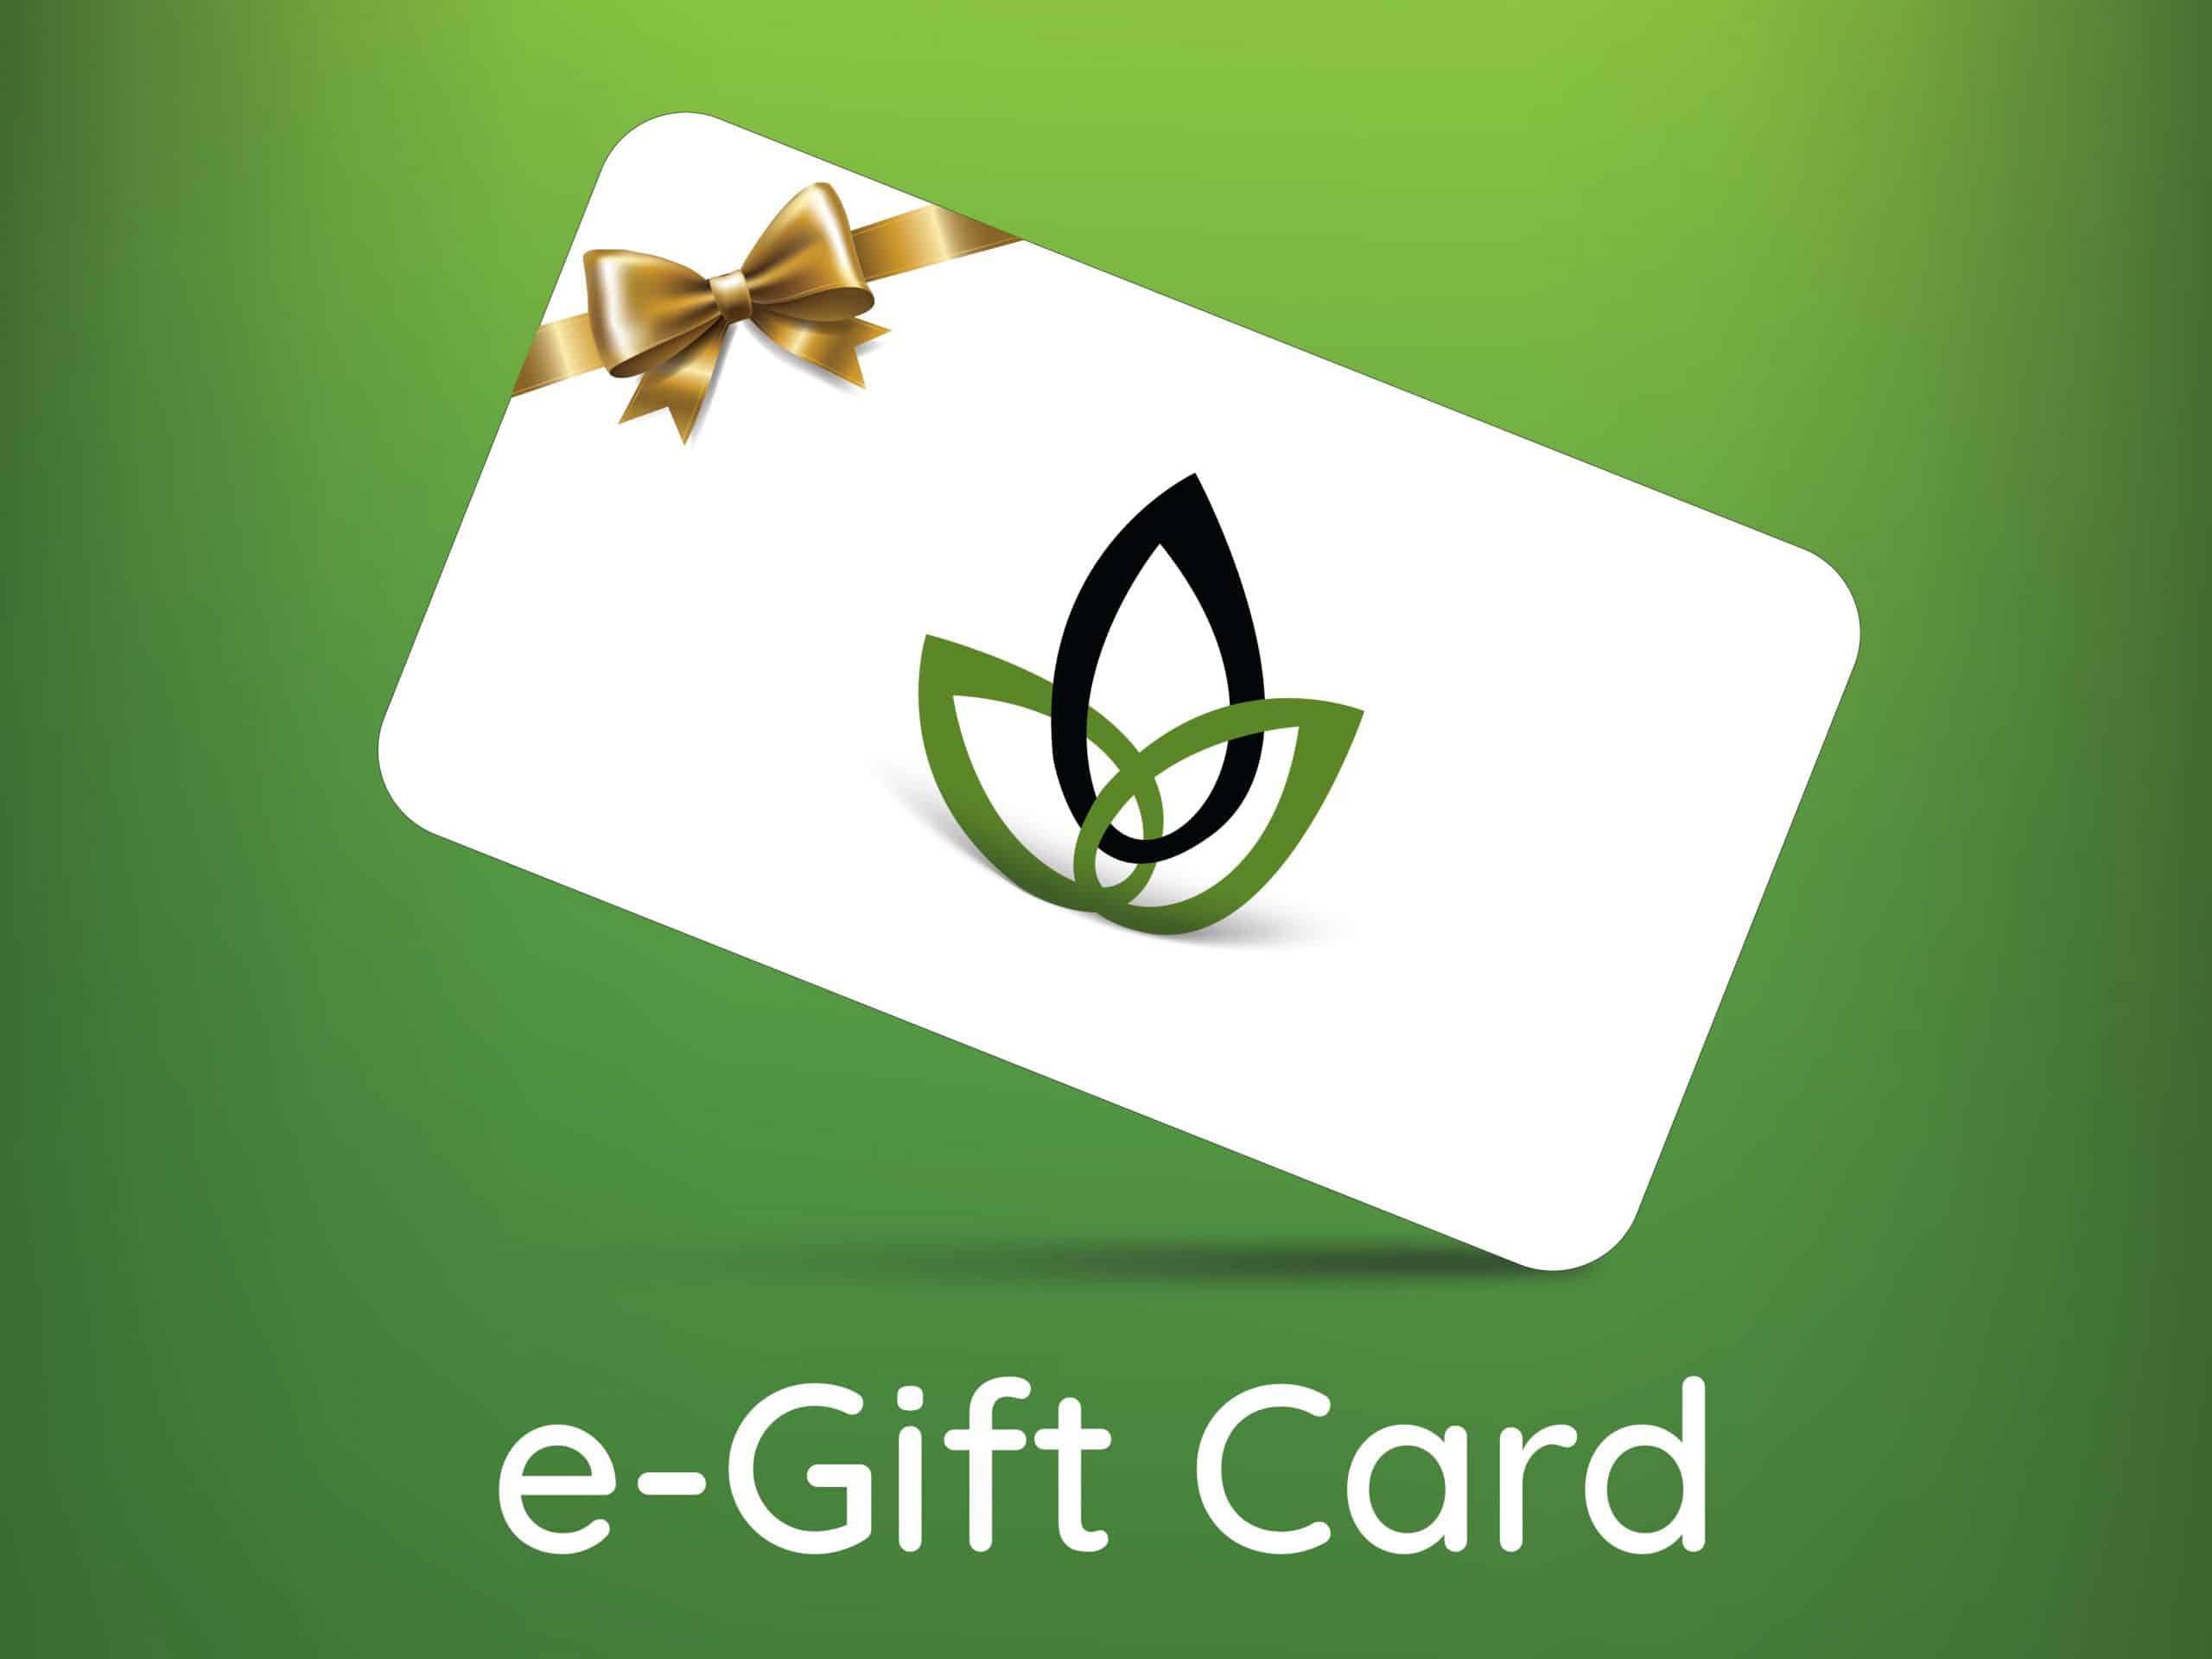 Clary Sage e-gift card image